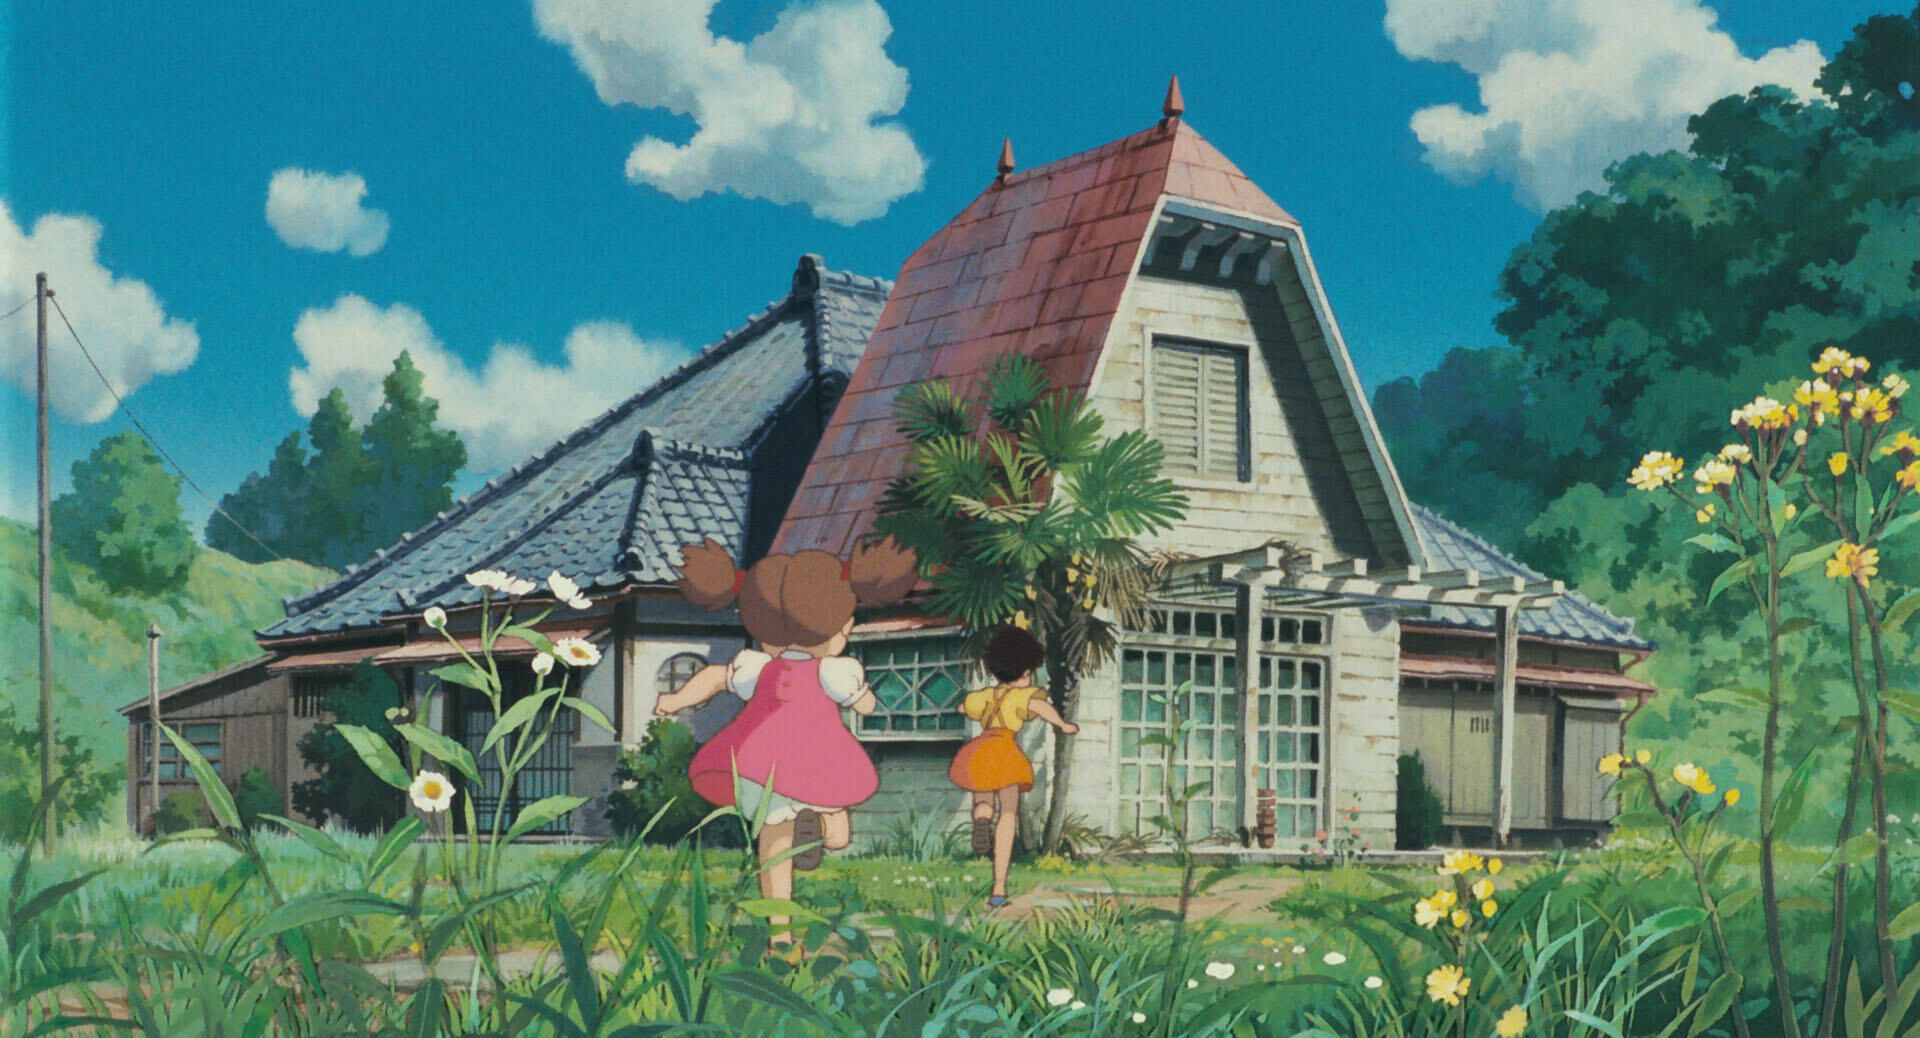 My Neighbor Totoro Ghibli Wiki Fandom